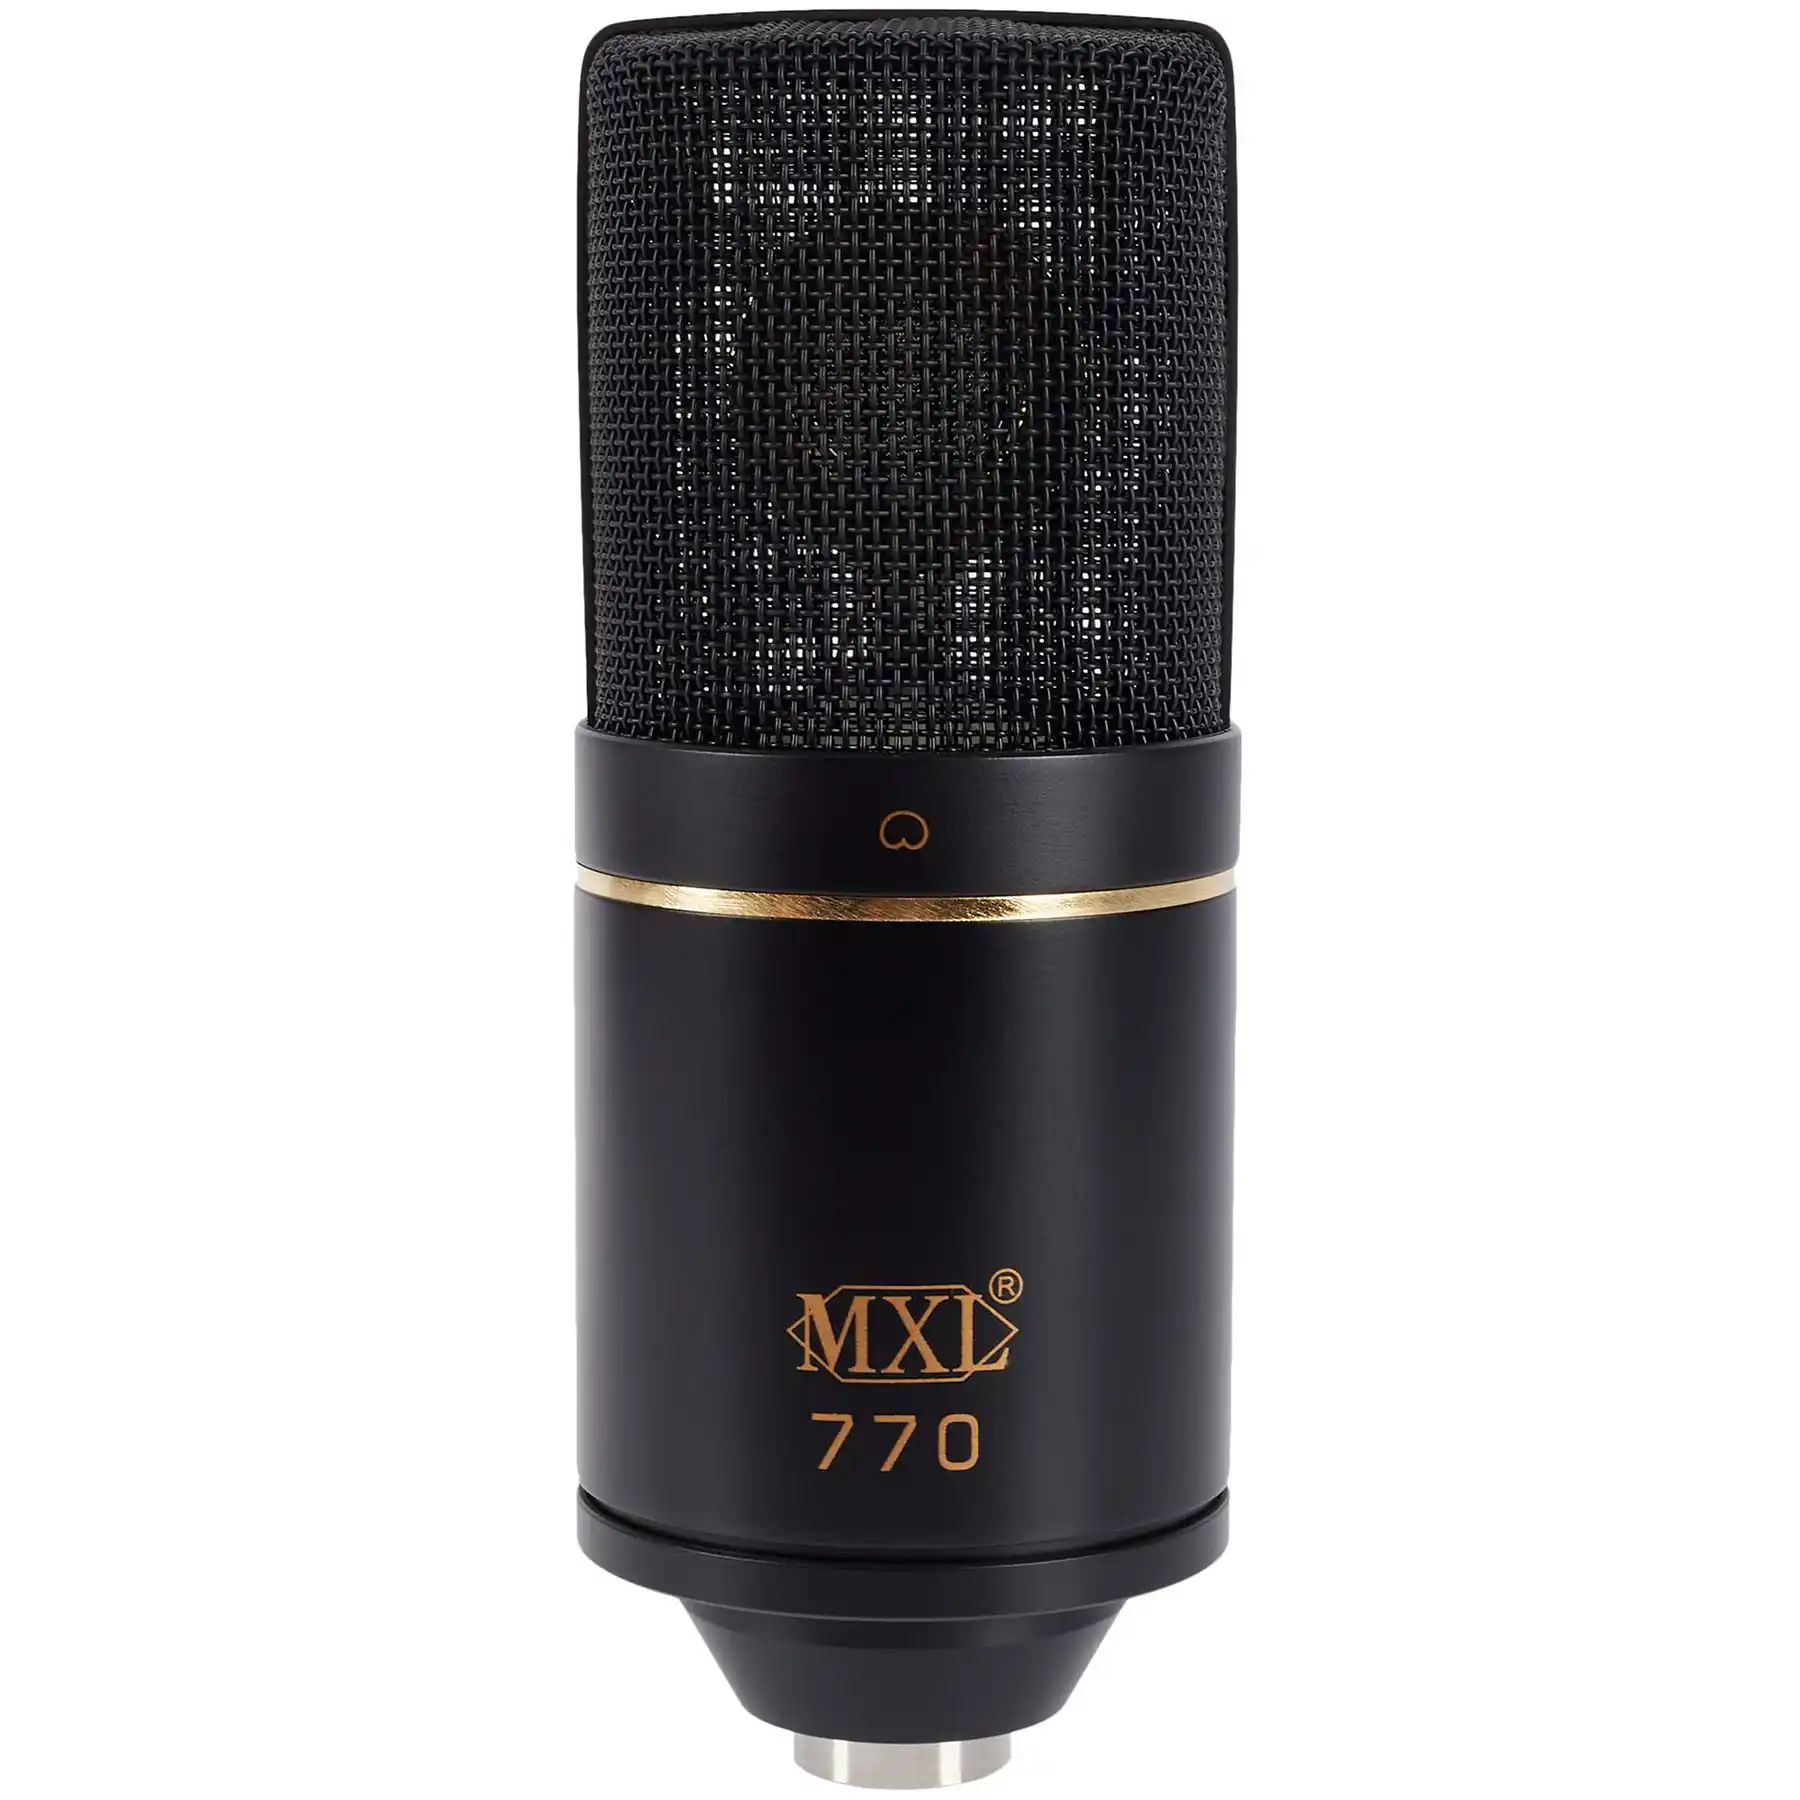 MXL 770 Geniş Diyafram Stüdyo Mikrofonu - Thumbnail